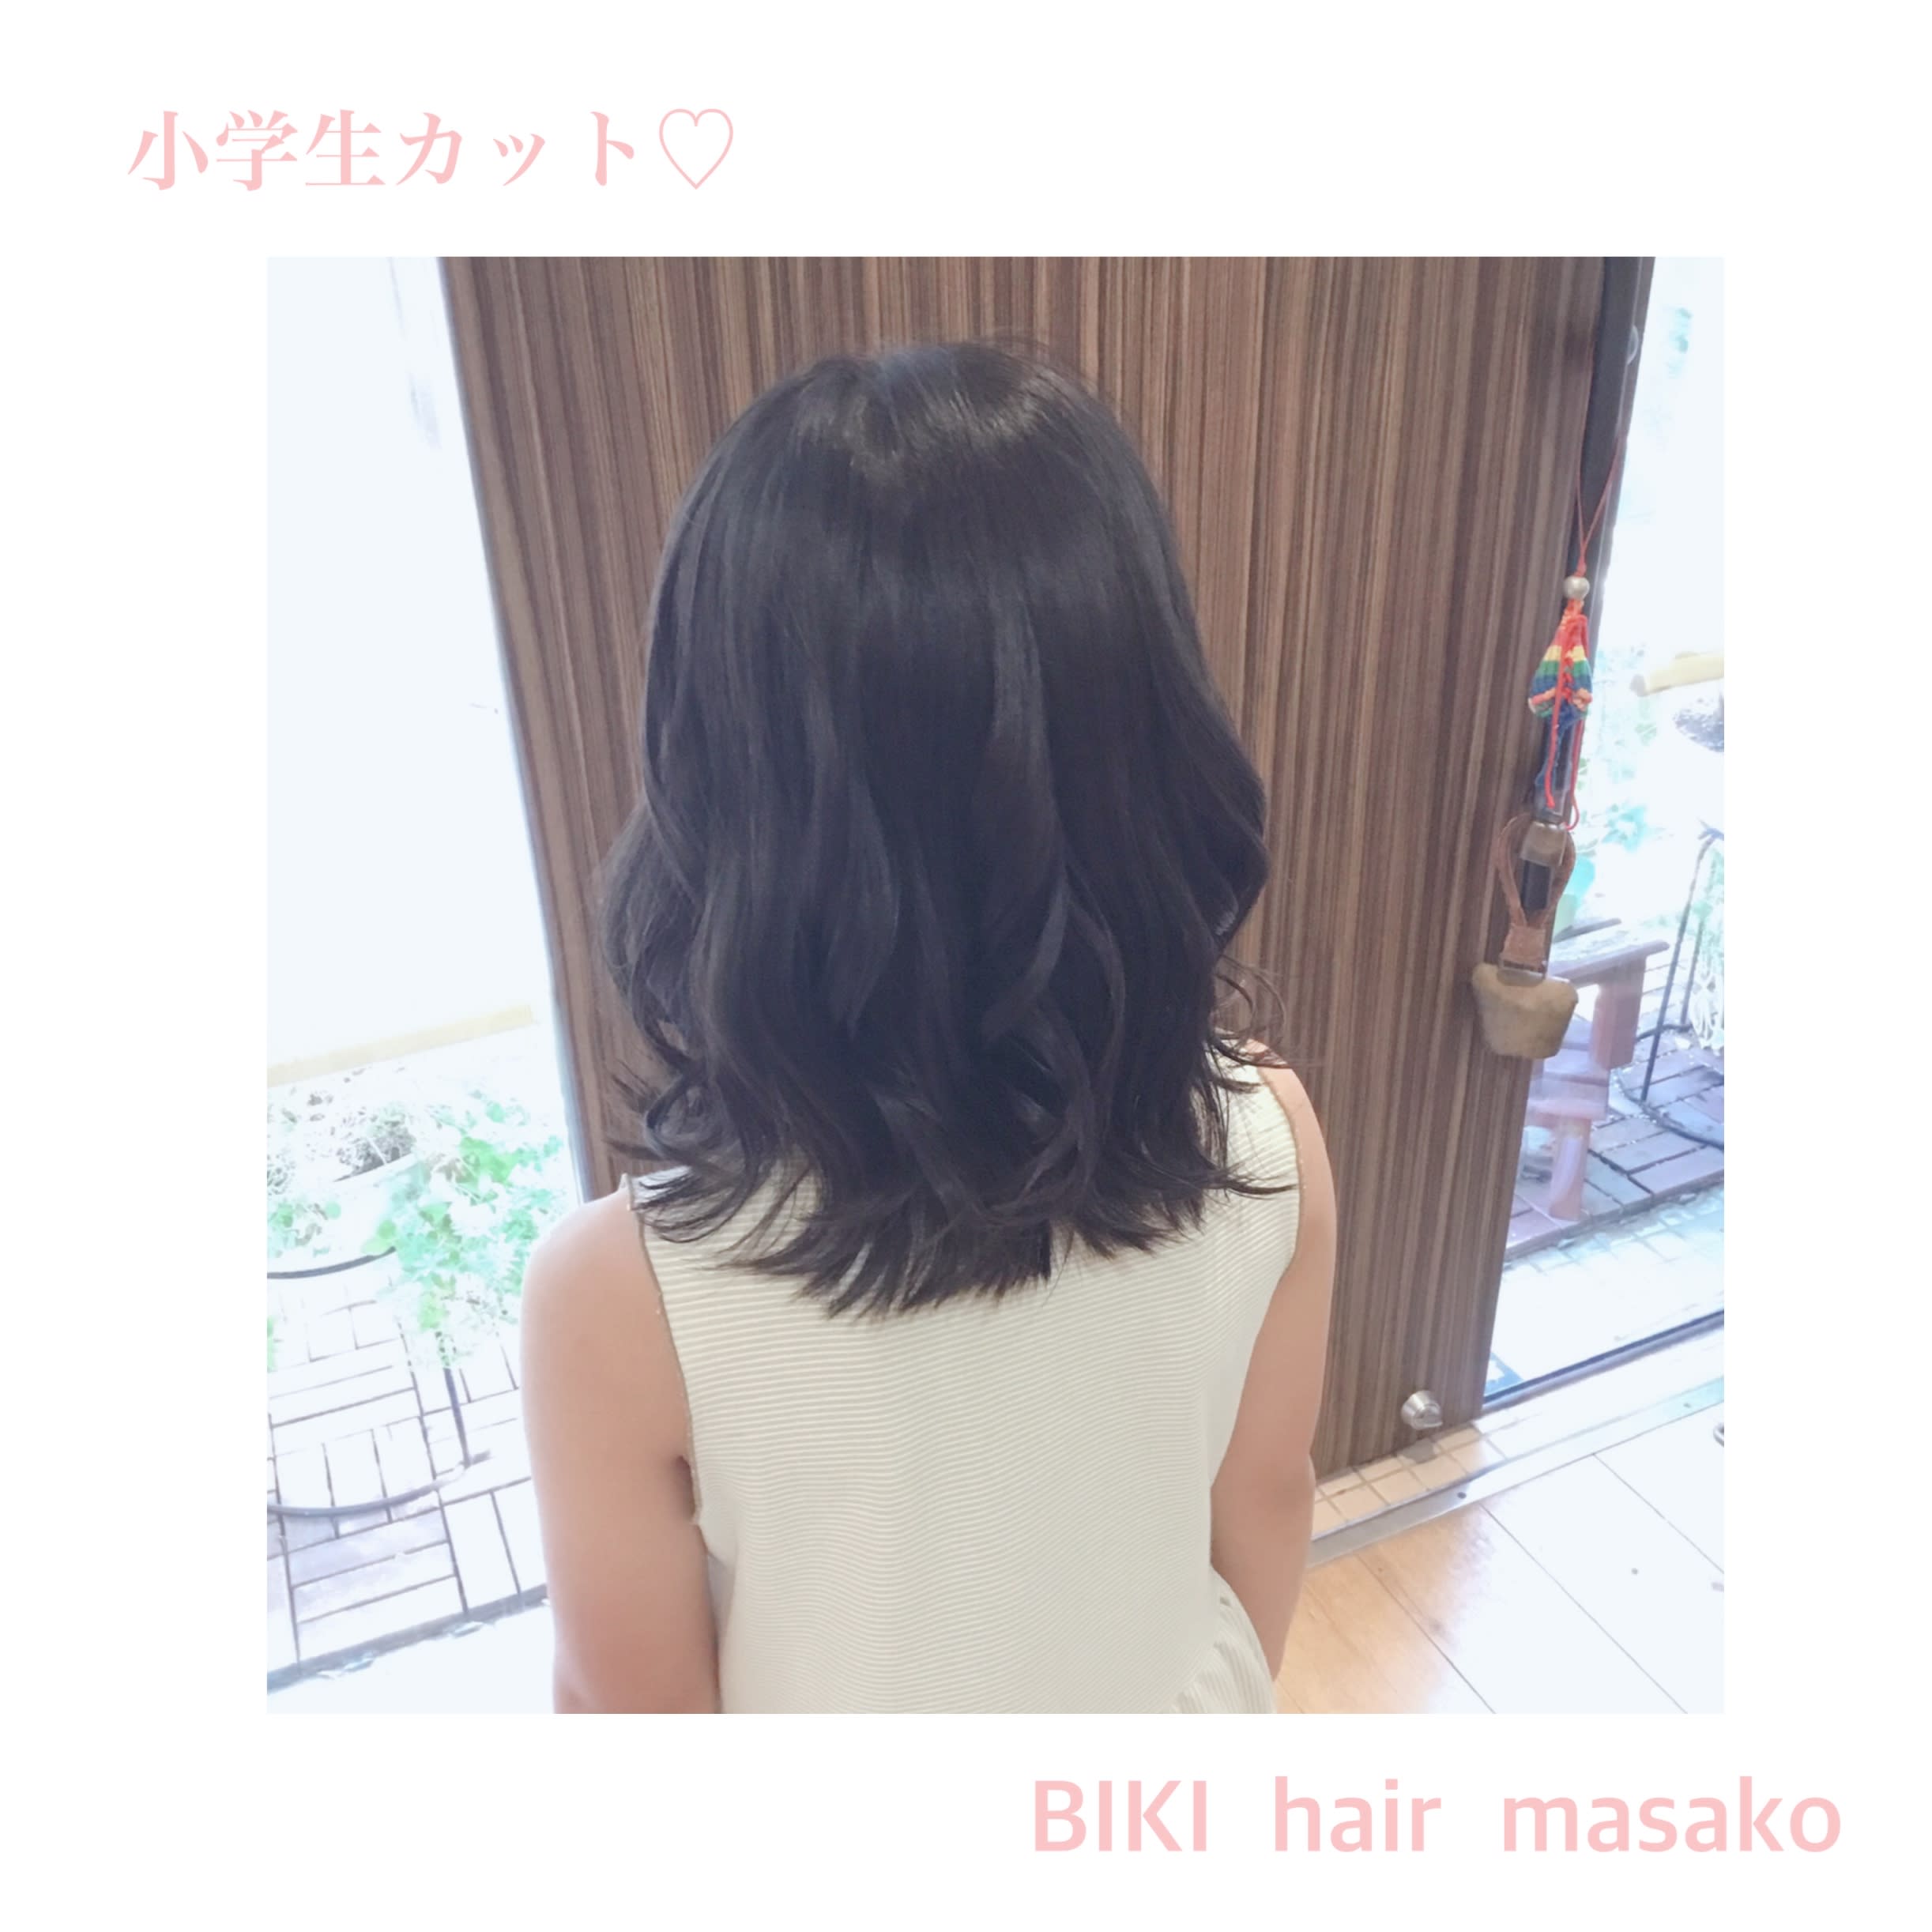 Biki Hair【ビキヘア】のスタイル紹介。小学生カット